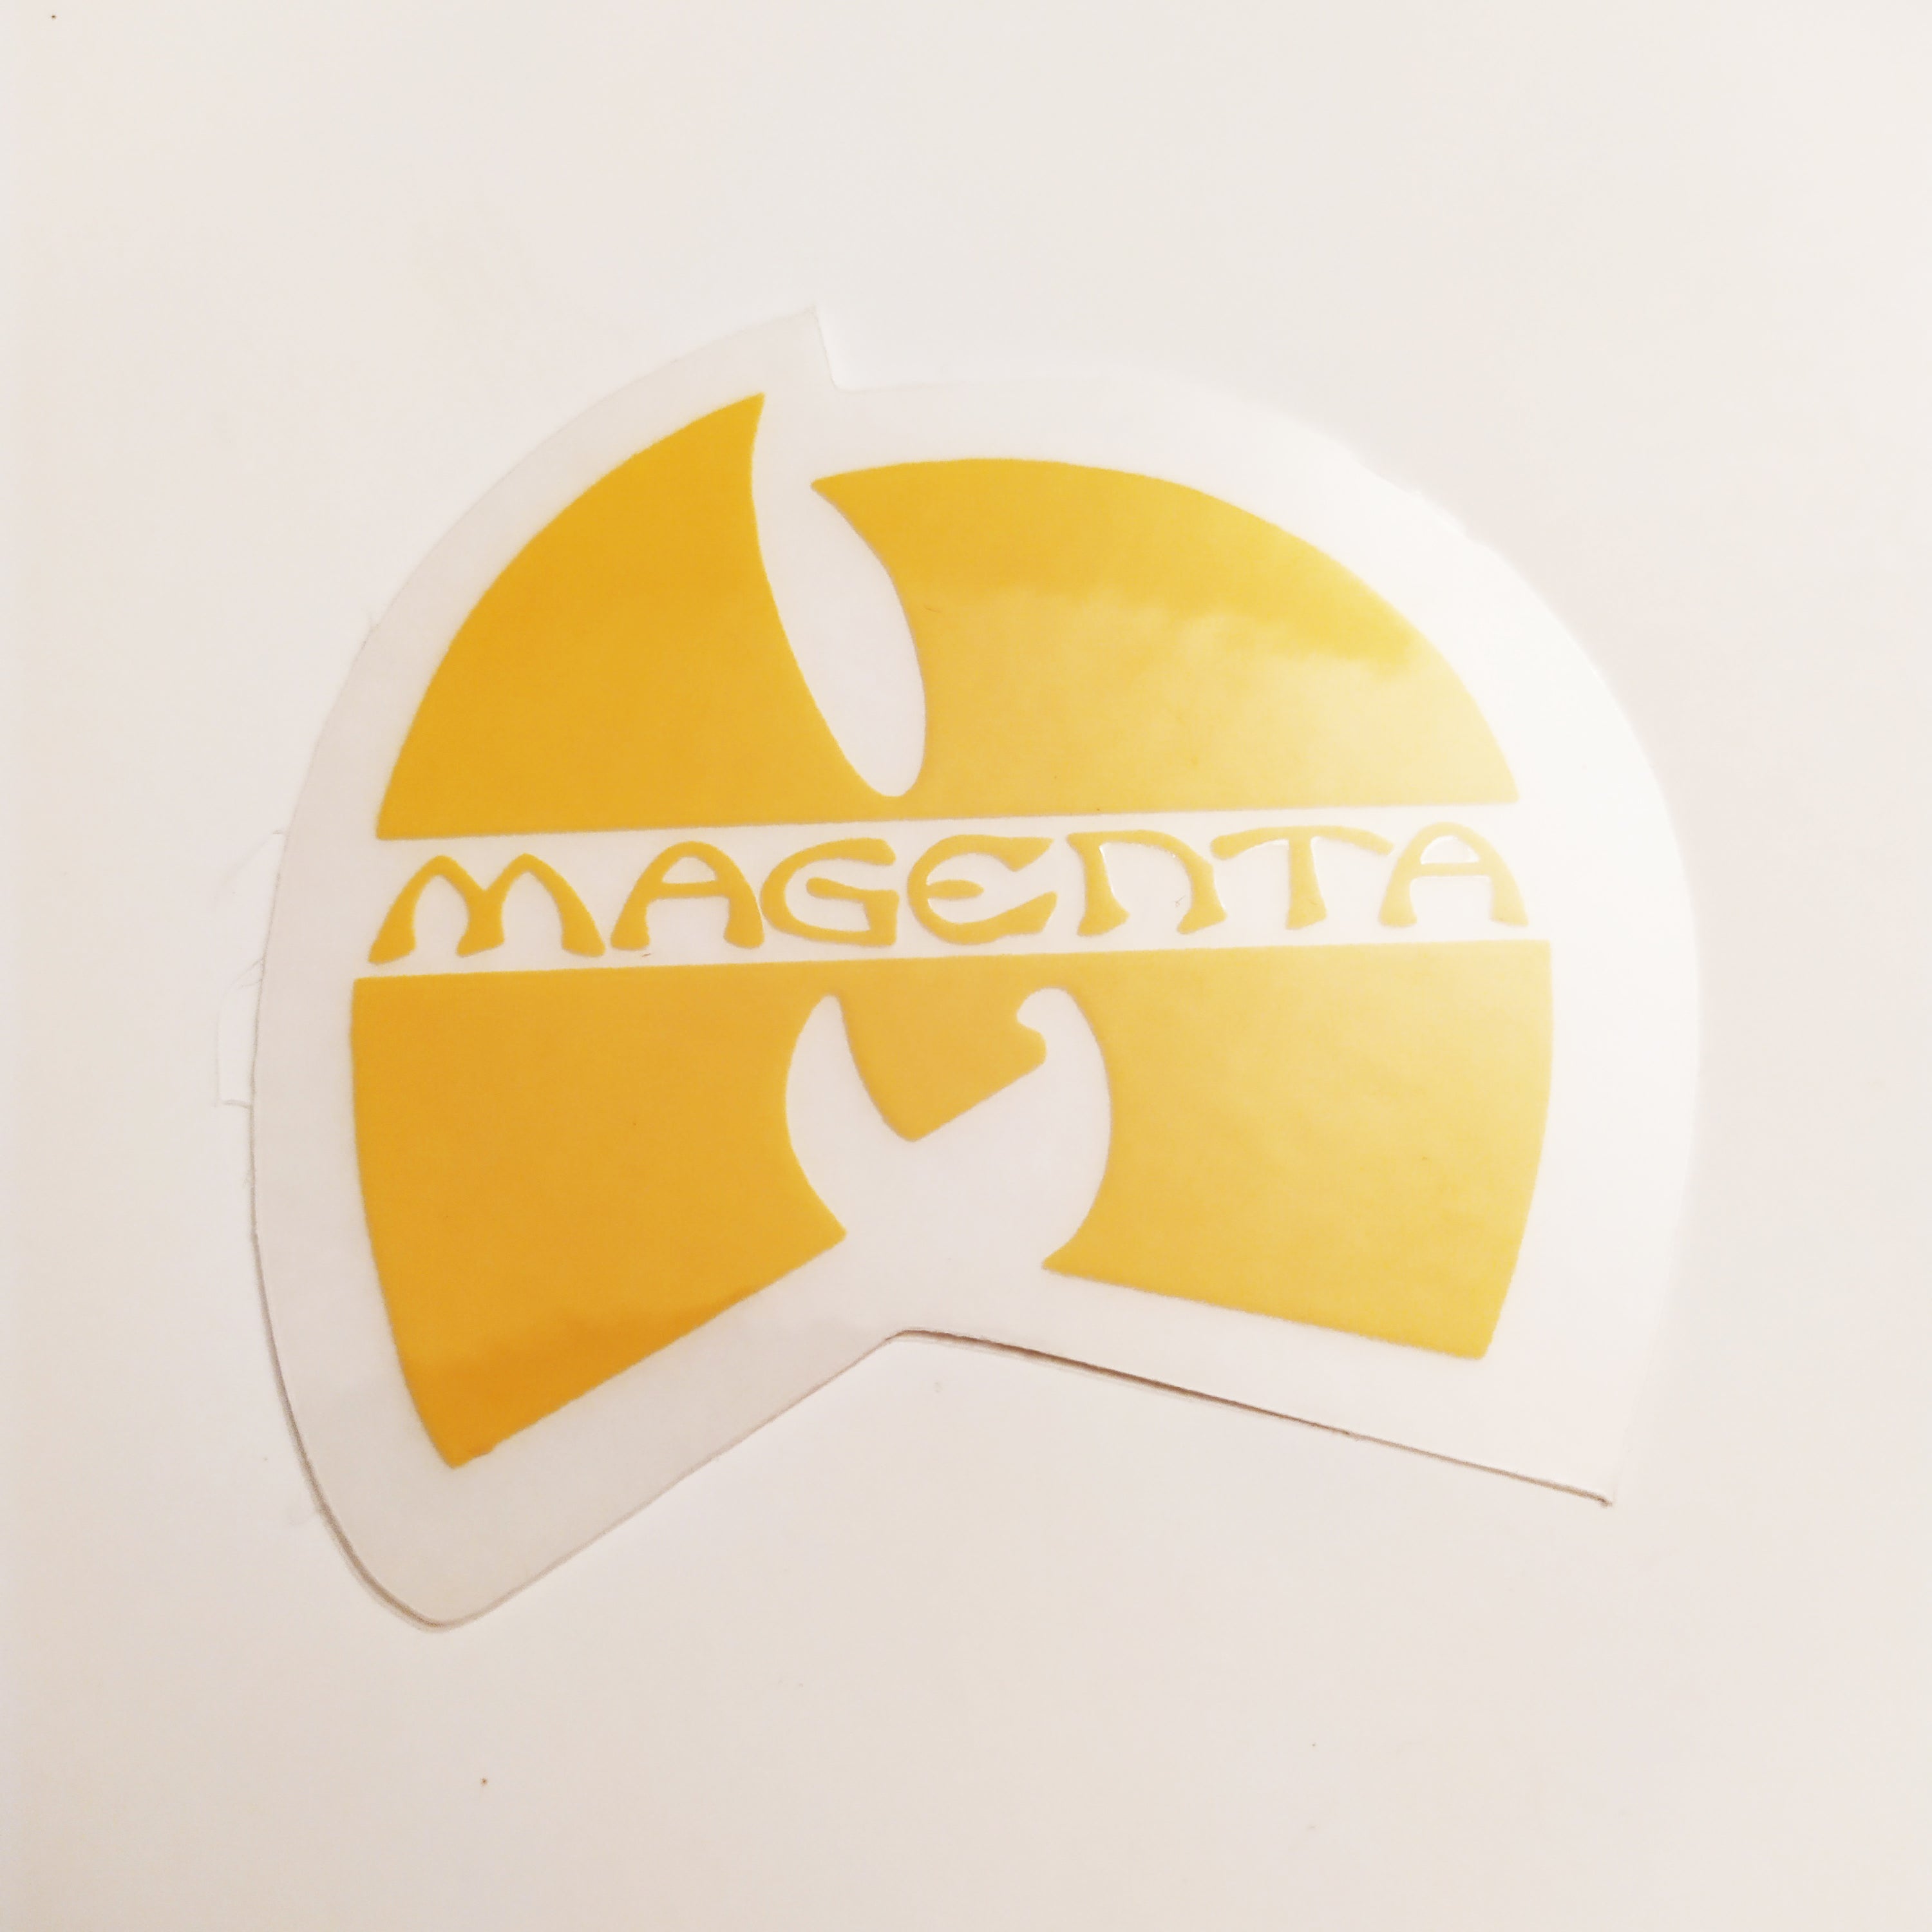 Magenta Skateboard Sticker - 6cm across approx - Wugenta - SkateboardStickers.com